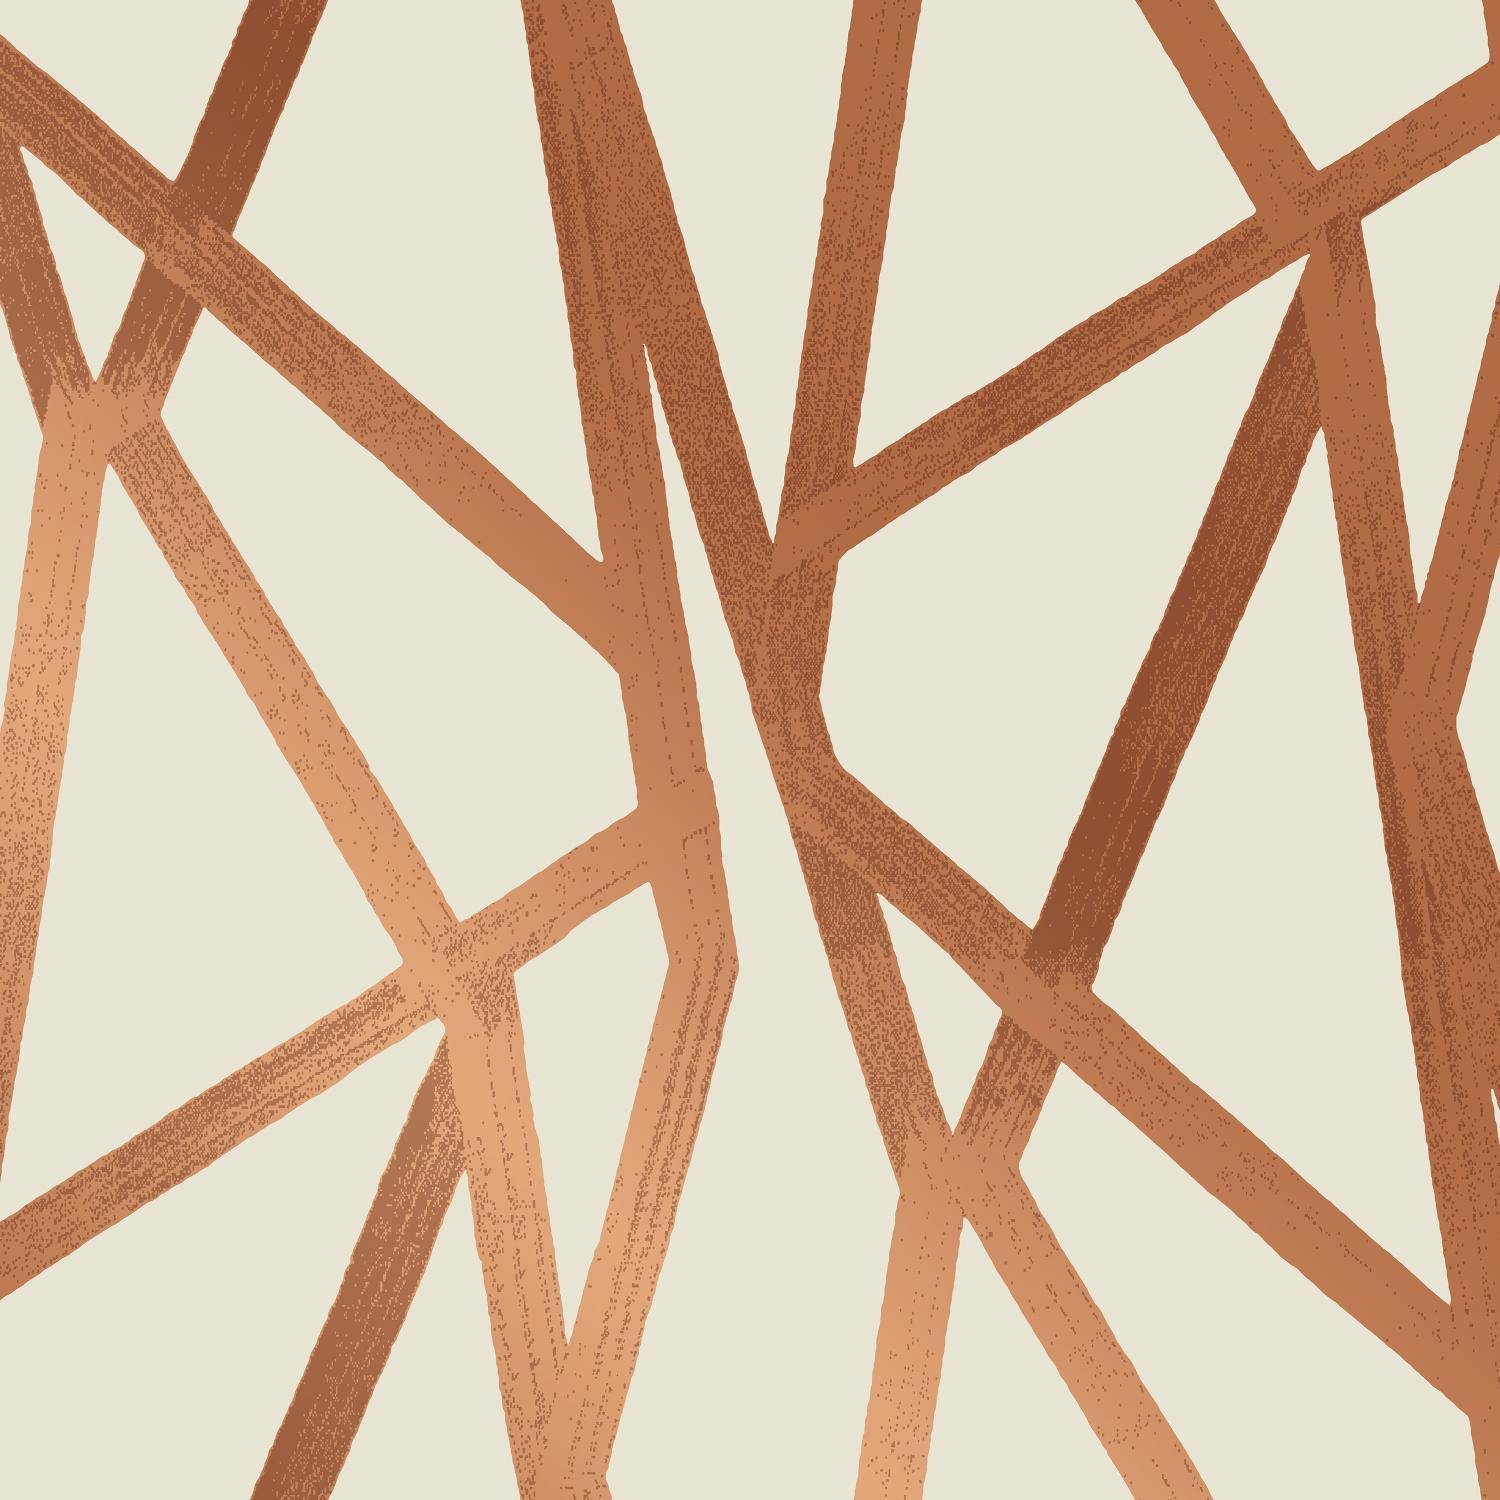 Tempaper Designs LIFESTYLE - Genevieve Gorder Intersections Urban Bronze Peel and Stick Wallpaper